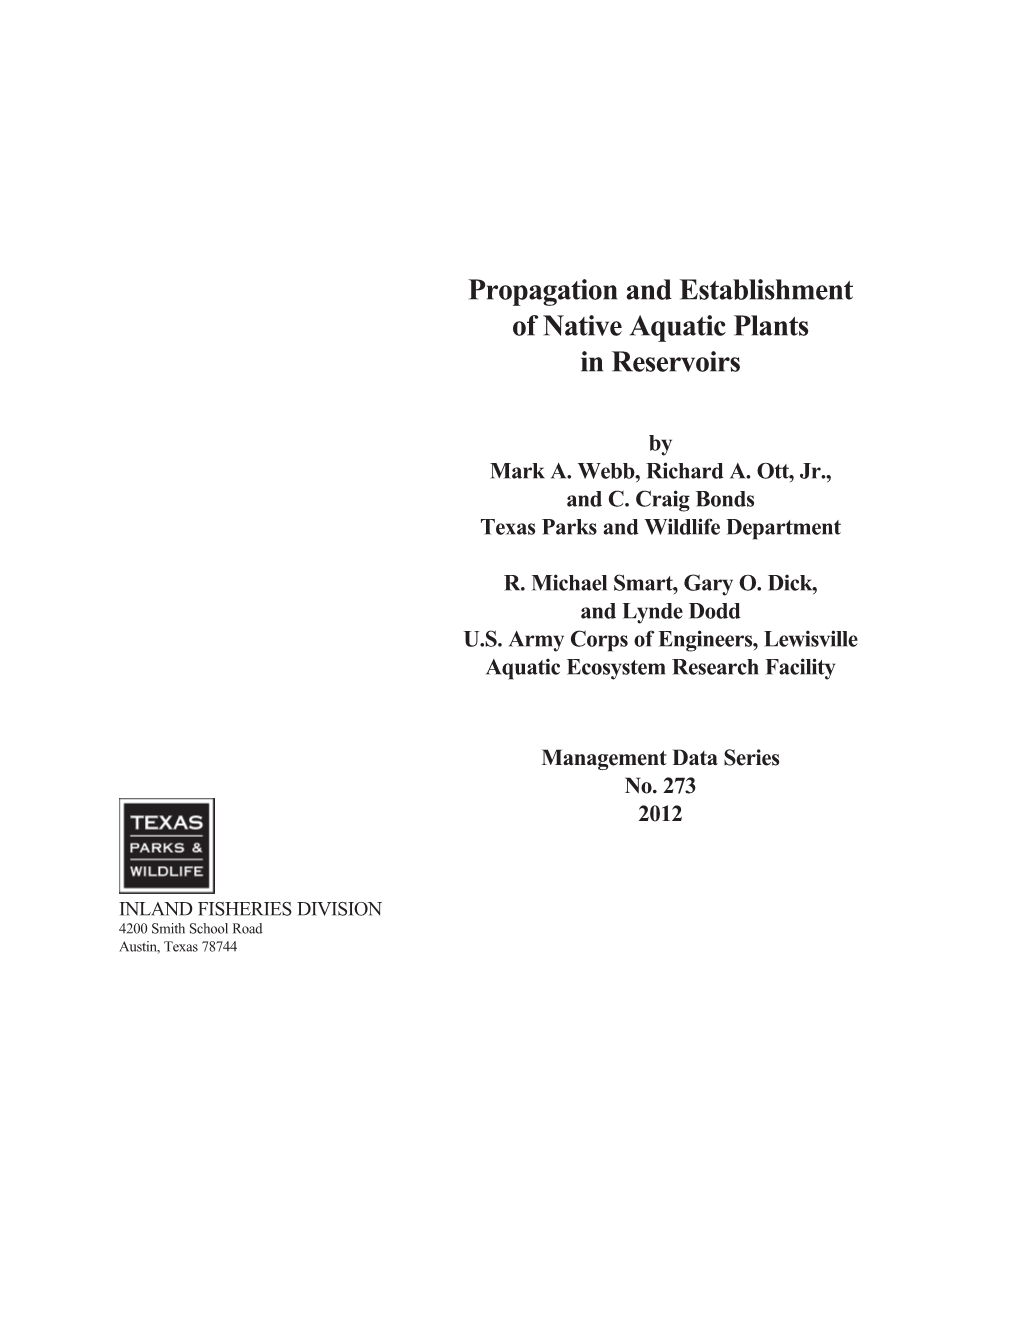 Propagation and Establishment of Native Aquatic Plants in Reservoirs